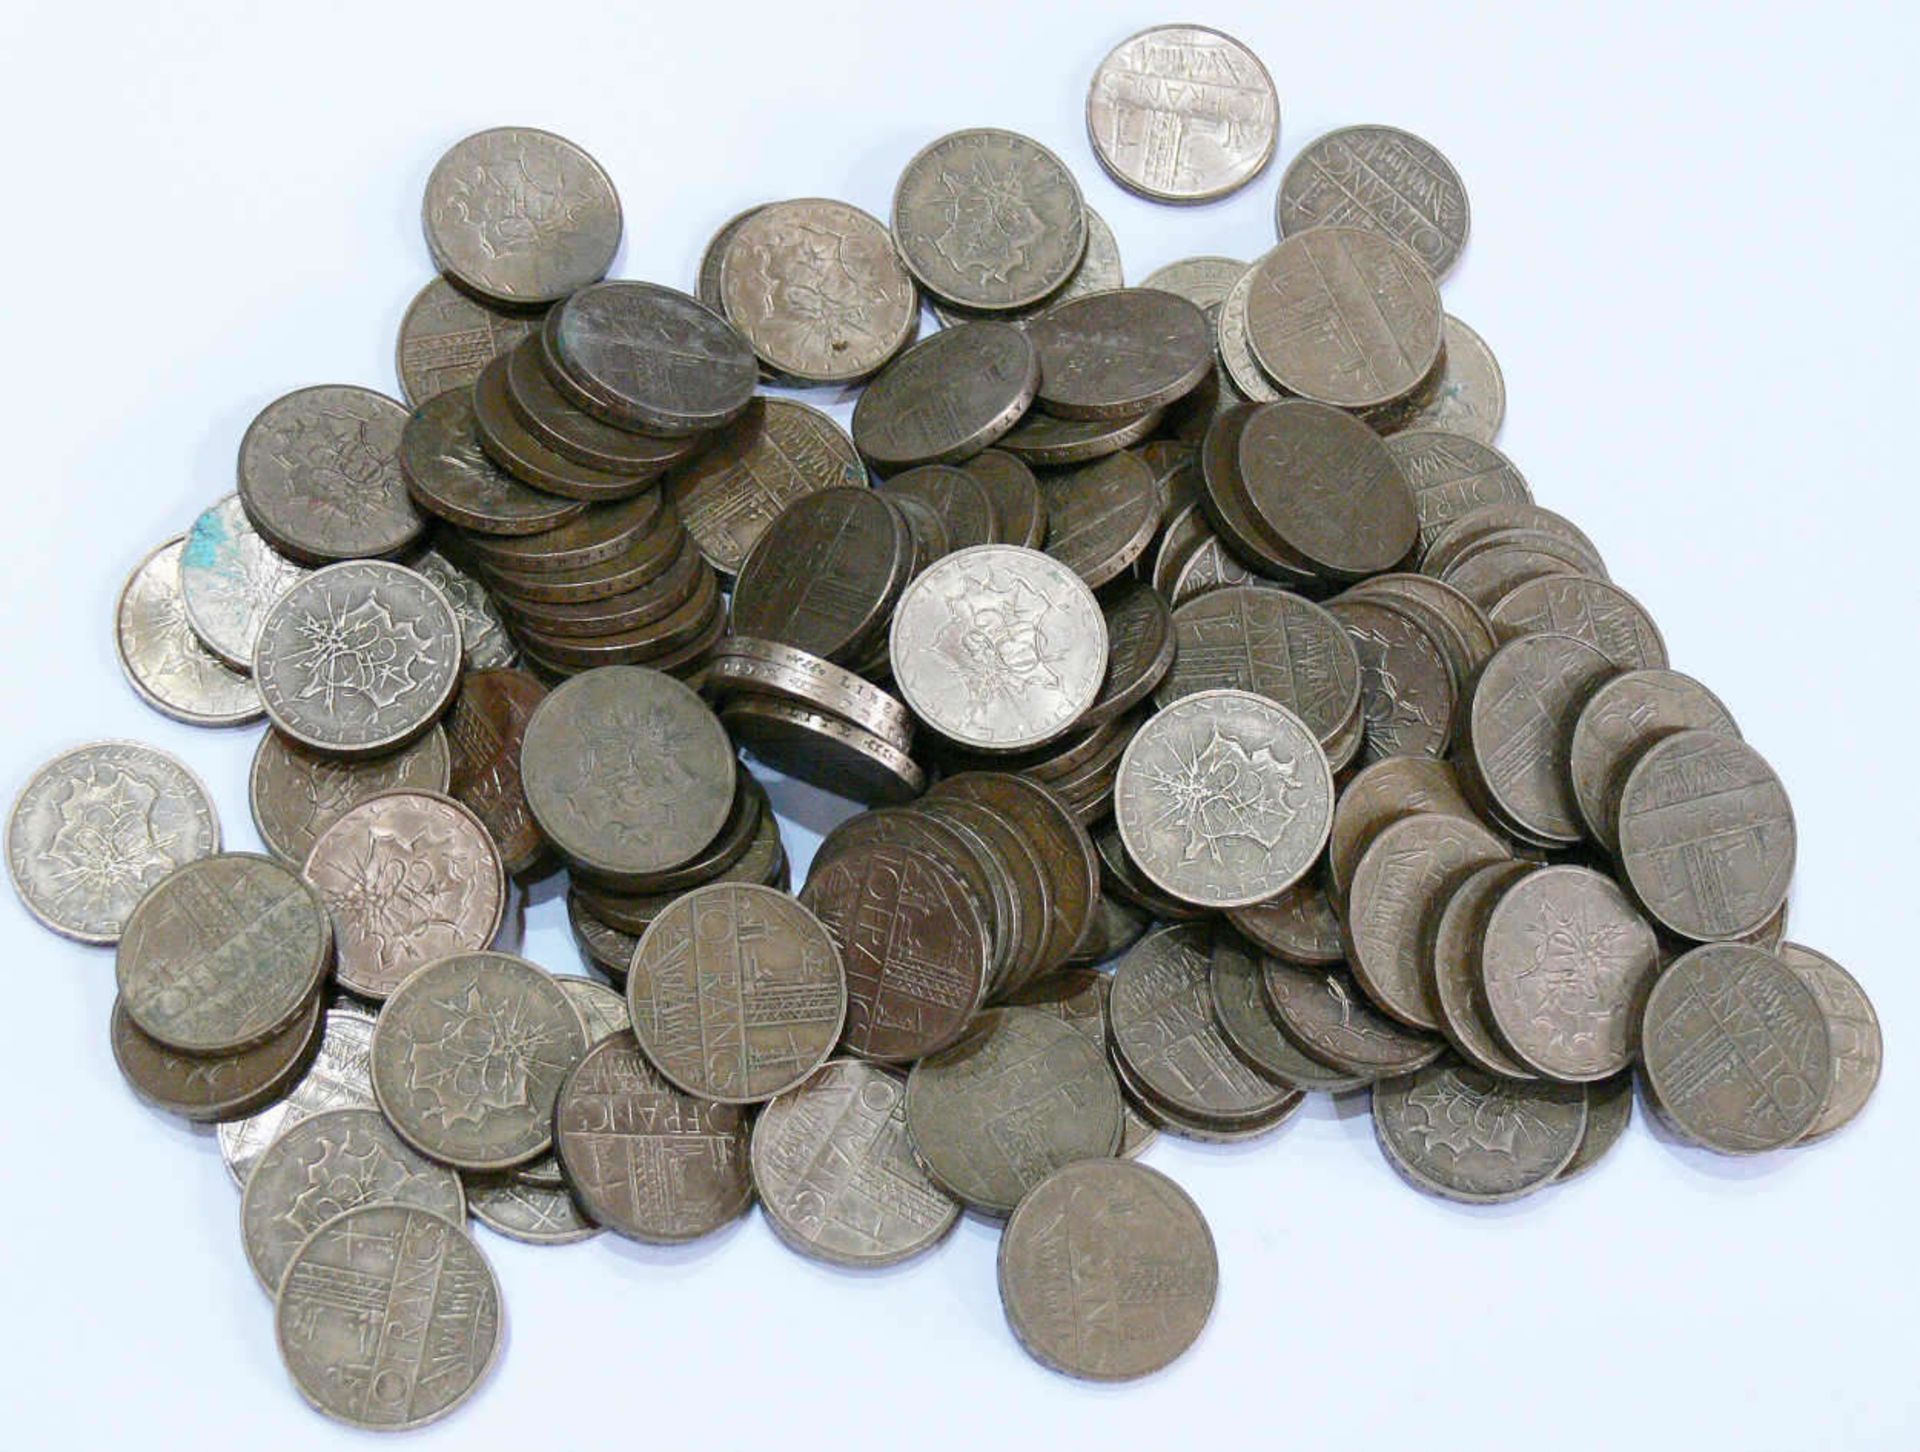 Frankreich, Lot 10.- Francs - Münzen, 135 Stück. Bitte besichtigen. France, Lot 10.- Francs - Coins,